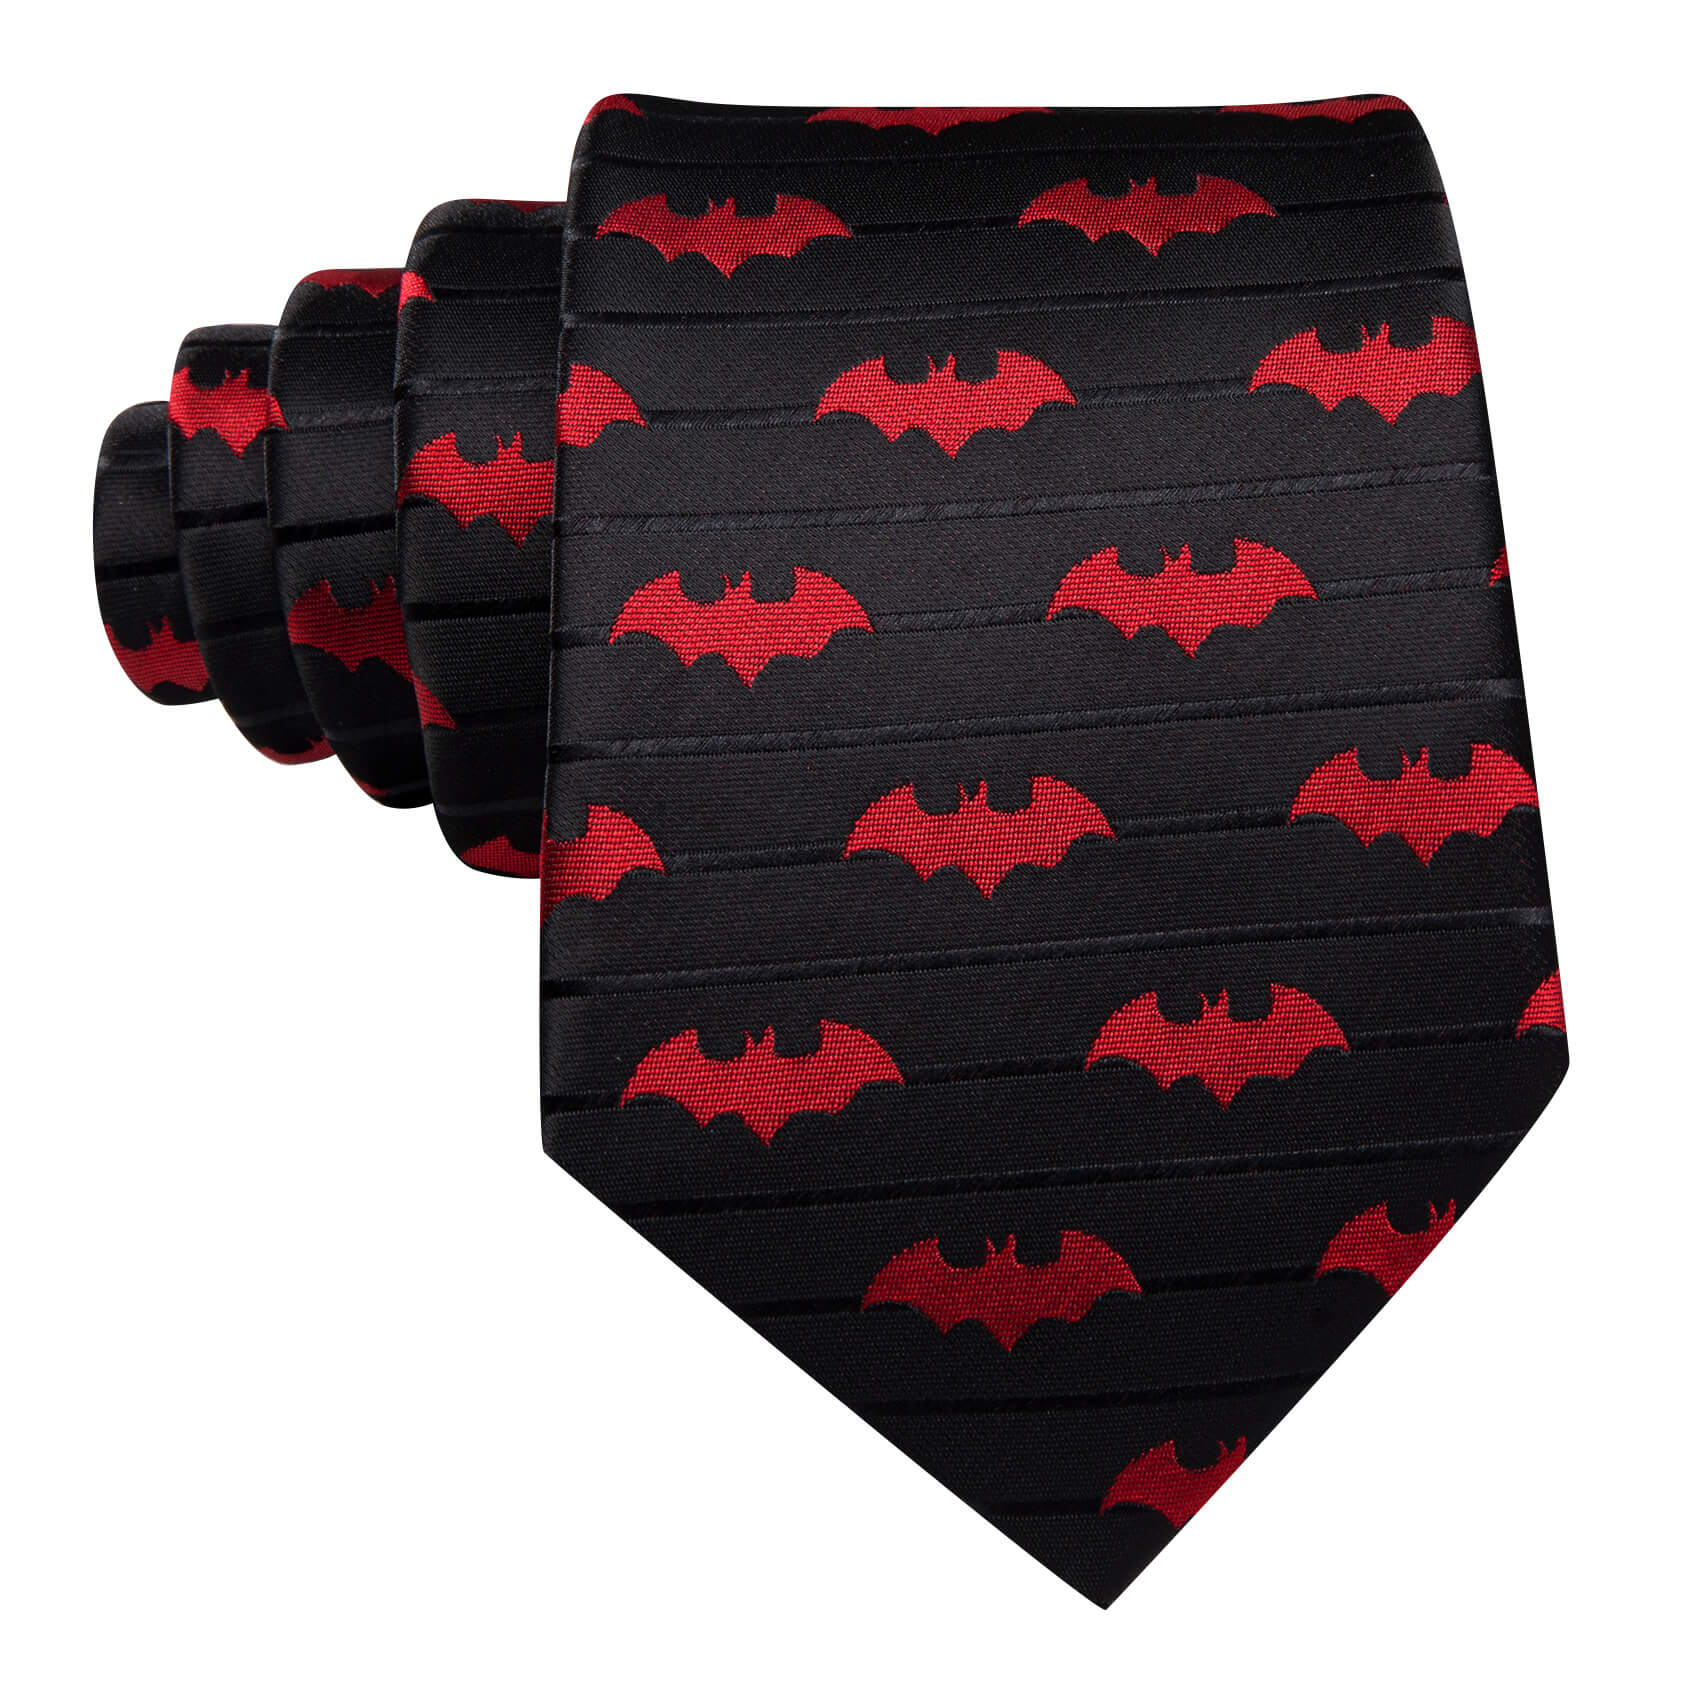 Barry.wang Black Tie Red Jacquard Bat Men's Silk Tie Hanky Cufflinks Set